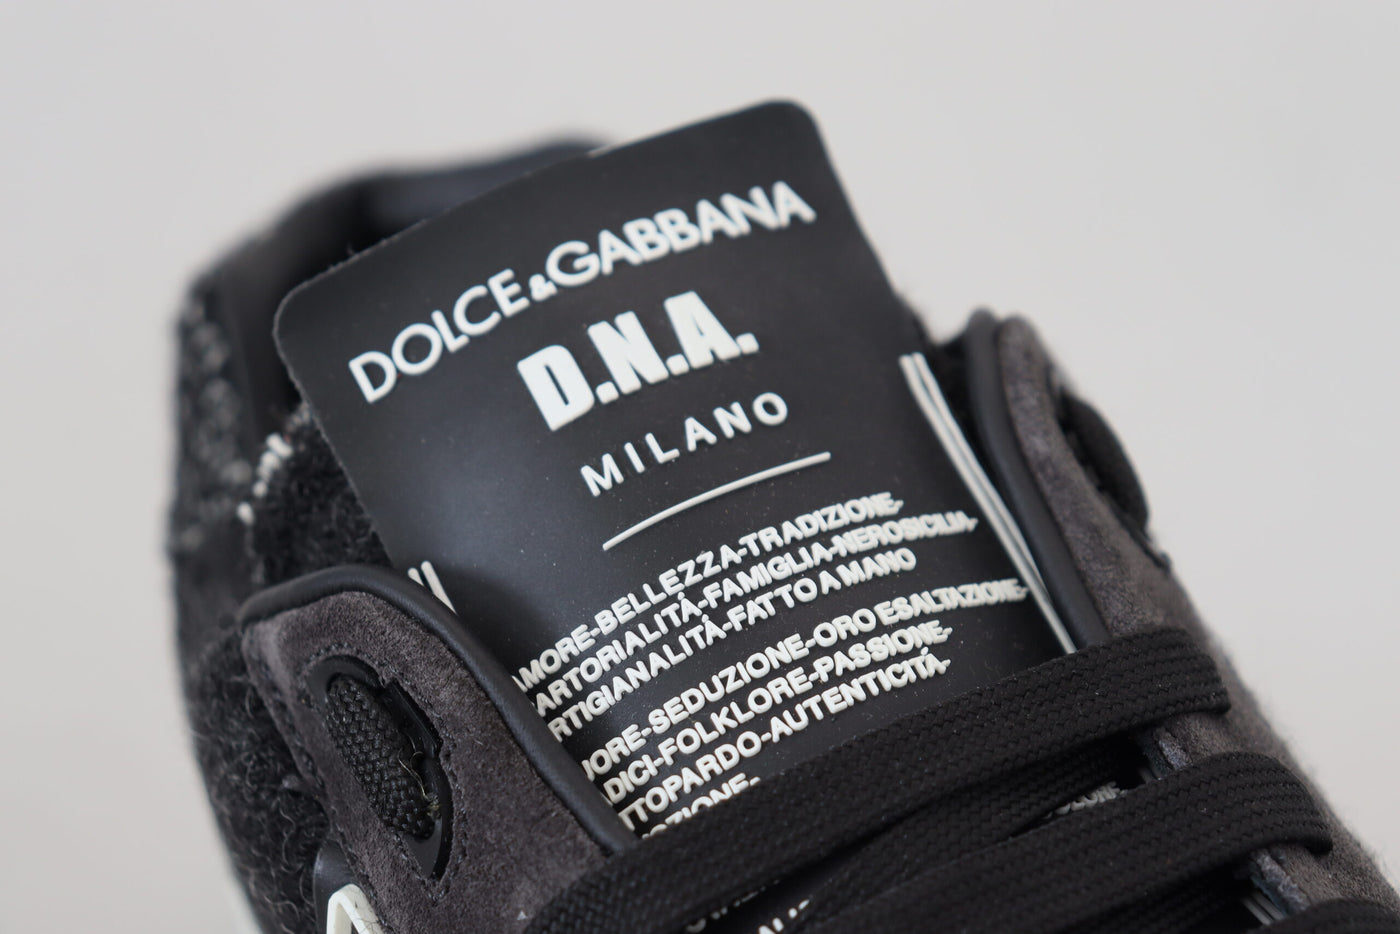 Black D.N.A. Milano Low Top Casual Sneakers